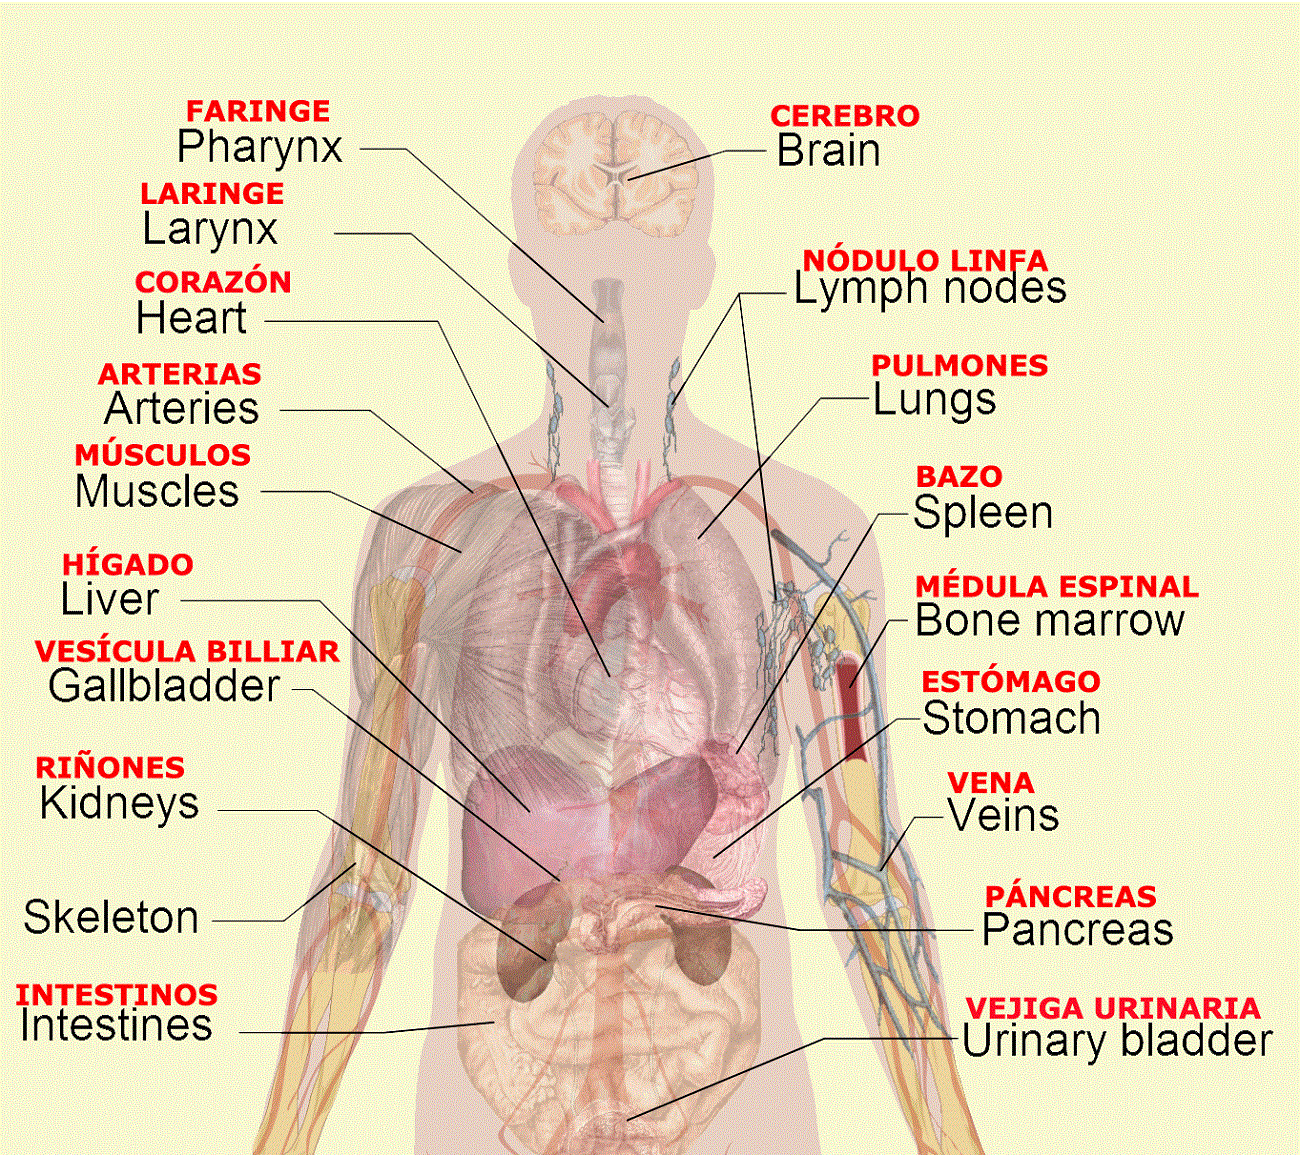 Human body organ diagram in spanish